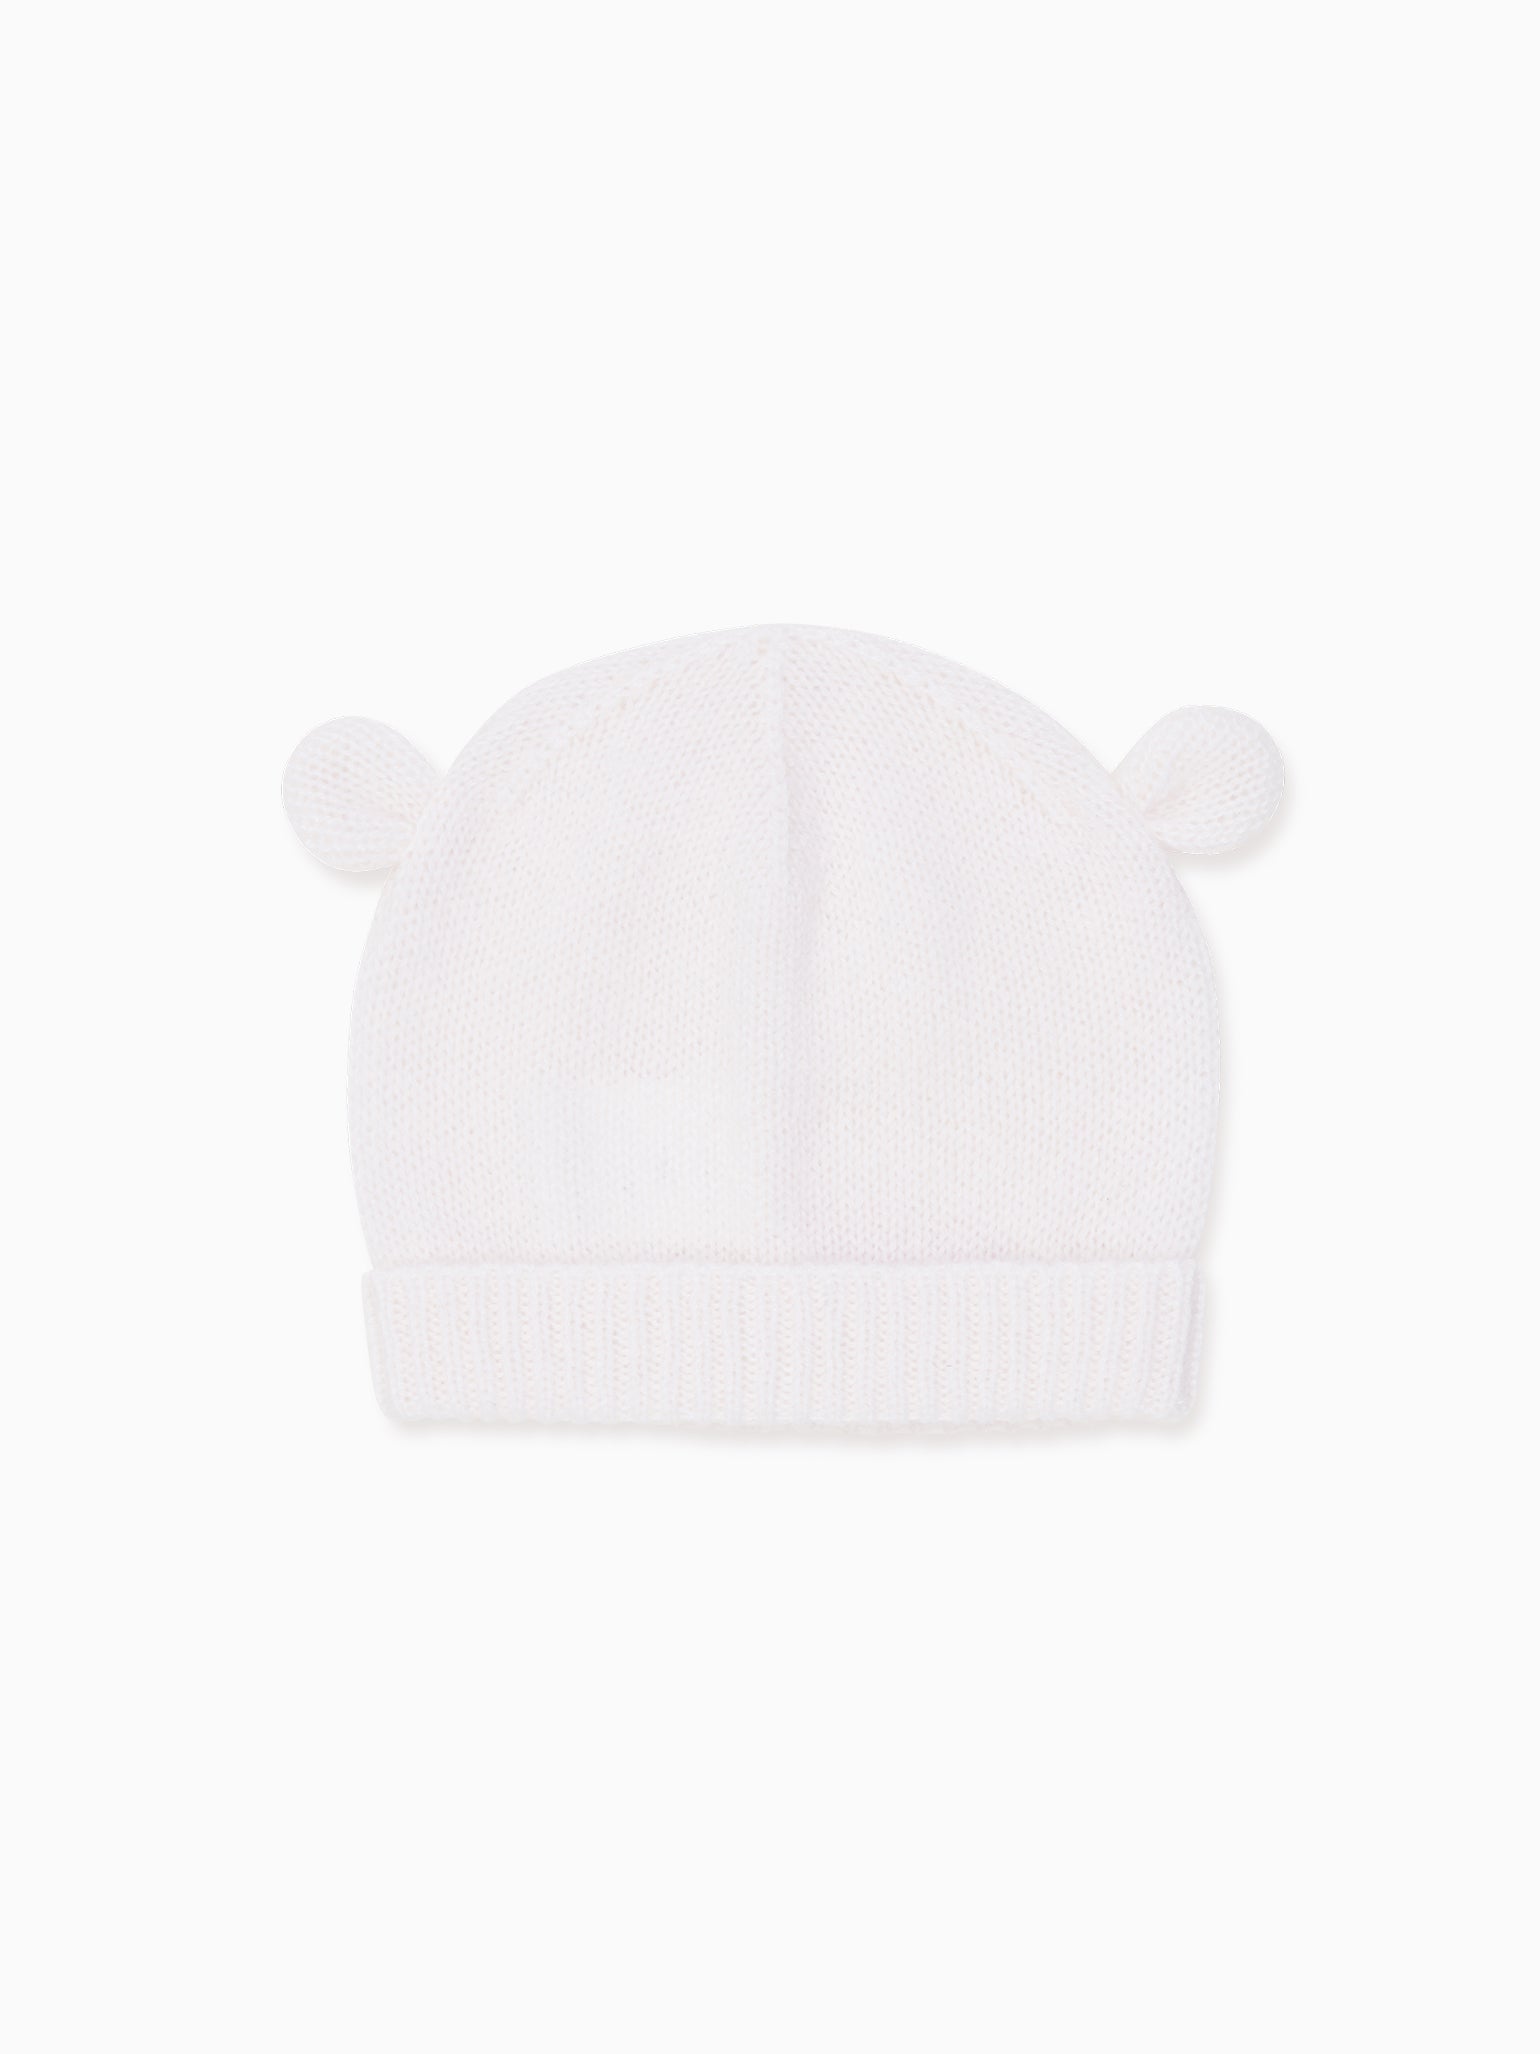 Ivory Gloria Cashmere Baby Hat